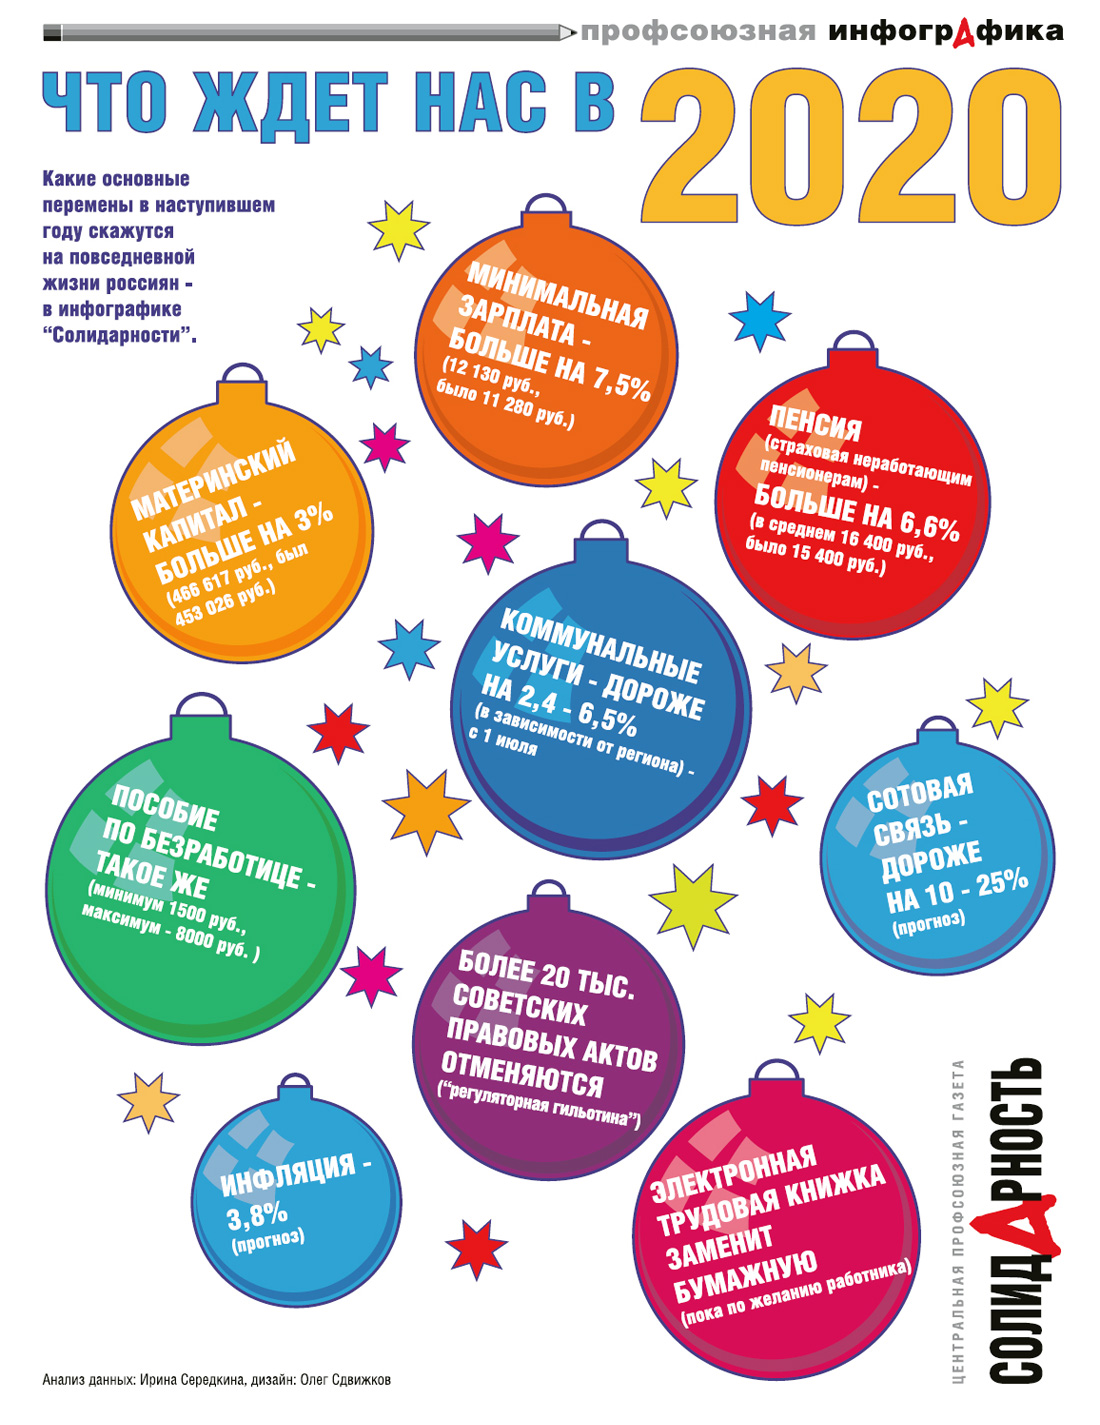 new 2020 year info 0120